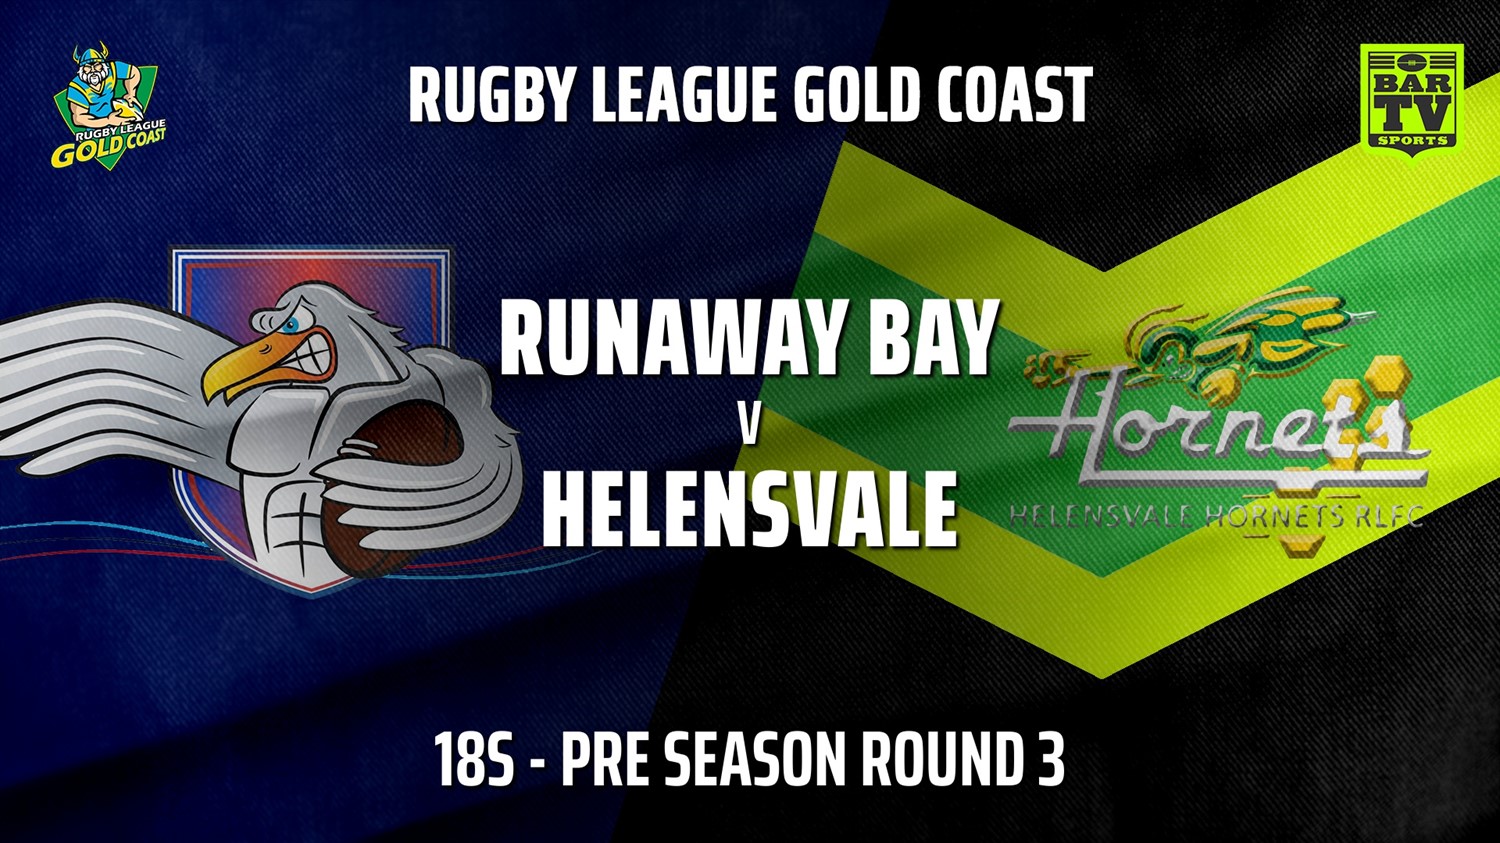 210421-RLGC Pre Season Round 3 - 18s - Runaway Bay v Helensvale Hornets Slate Image